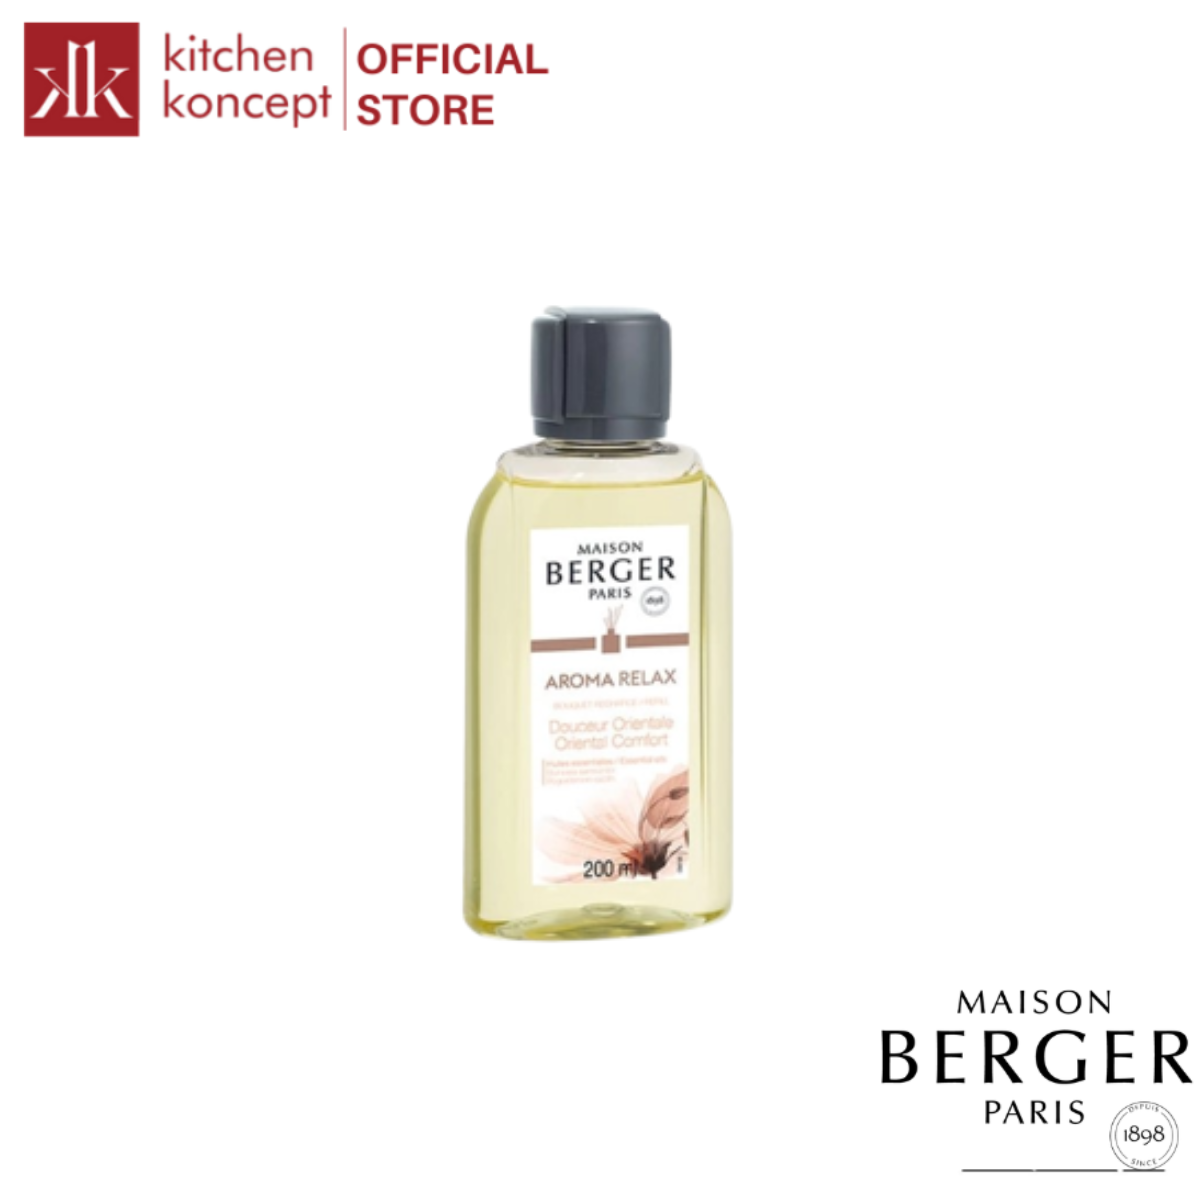 Maison Berger - Tinh dầu khuếch tán hương Aroma Relax - 200ml